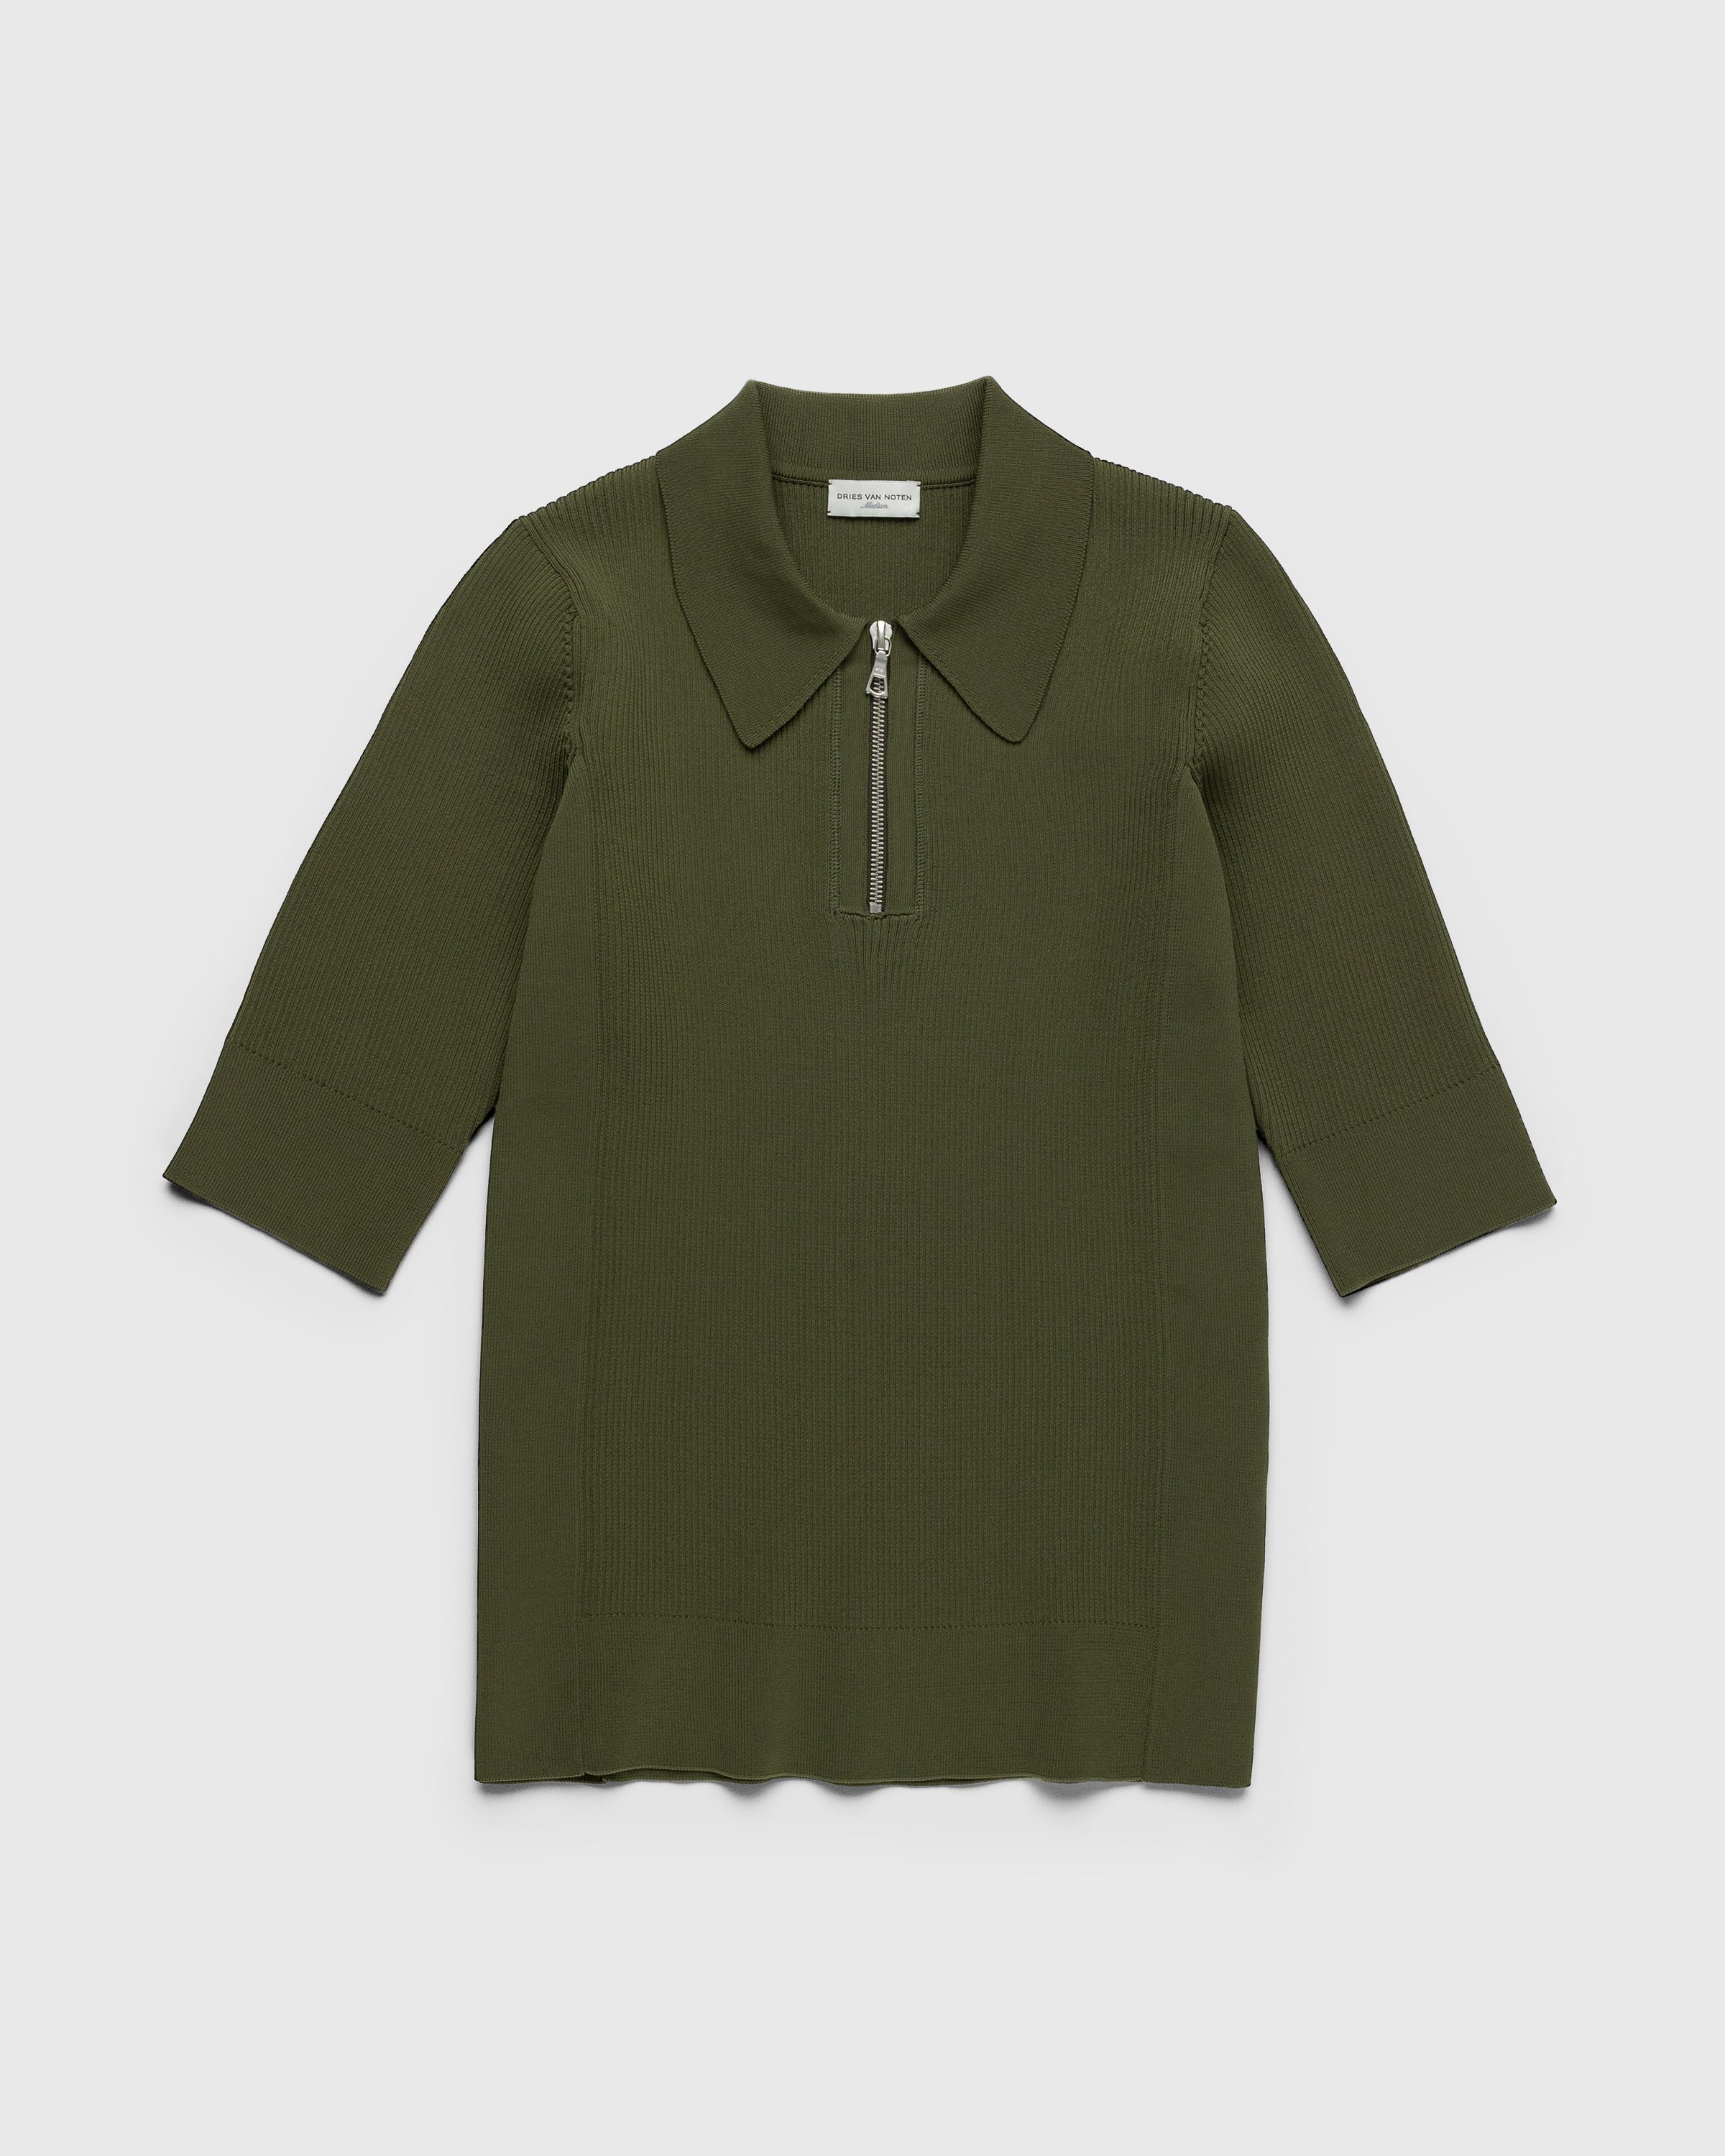 Dries van Noten - Neil Sweater - Clothing - Green - Image 1